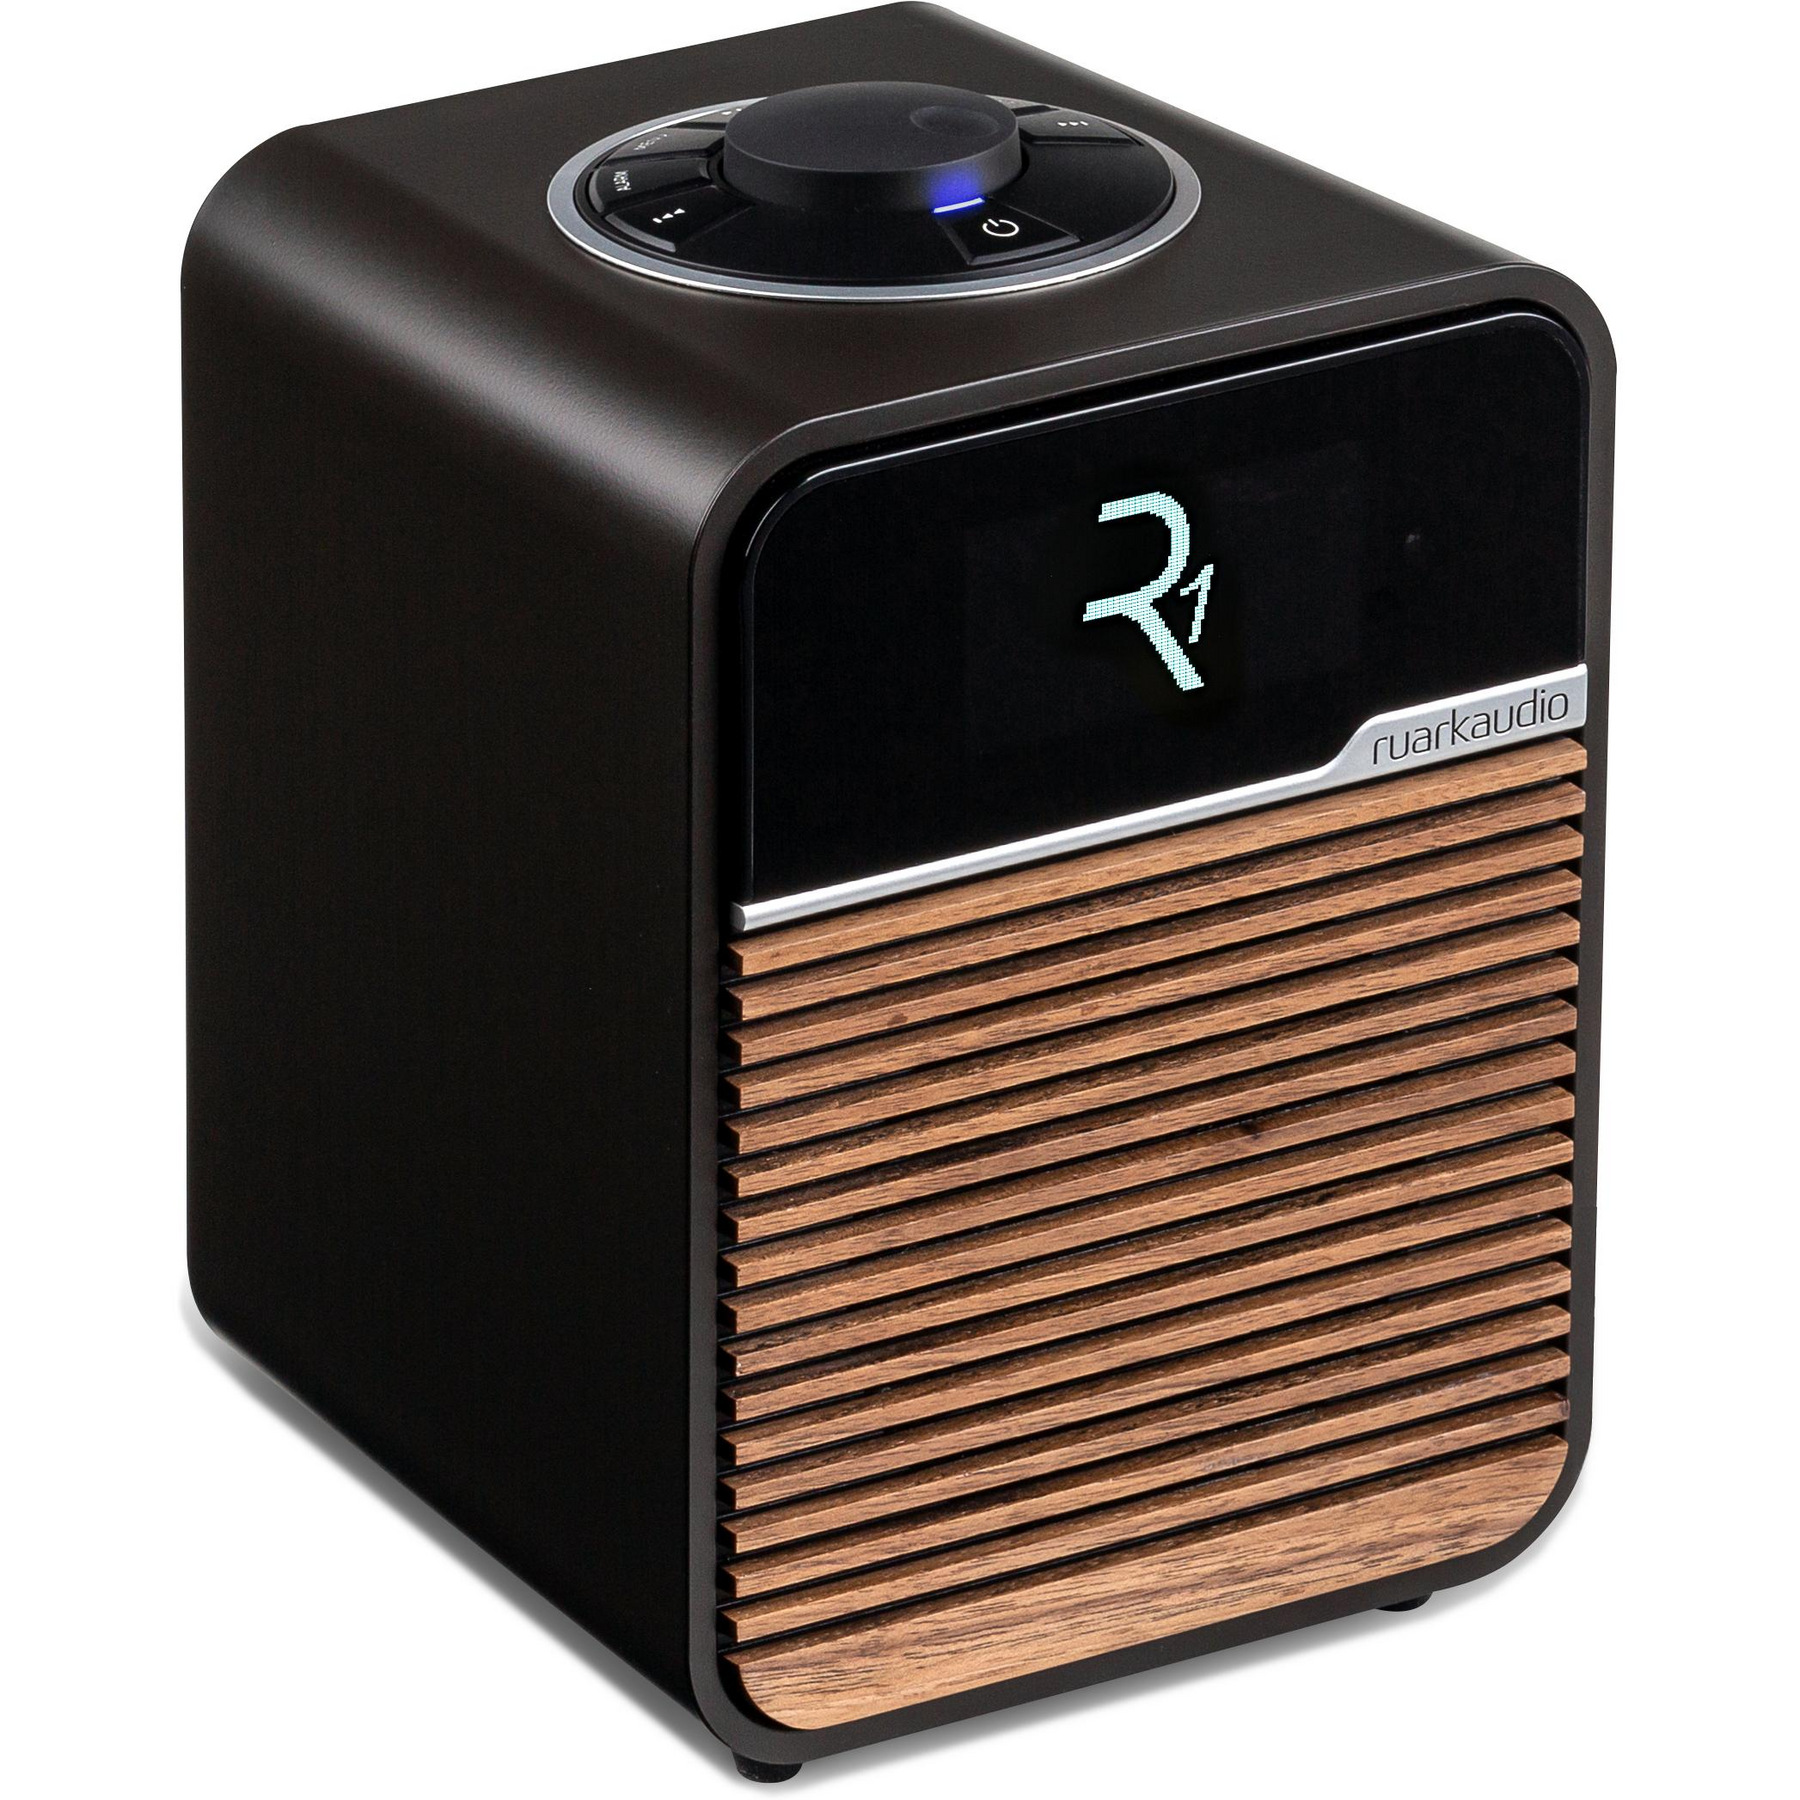 Ruark Audio R1 MK4 espresso